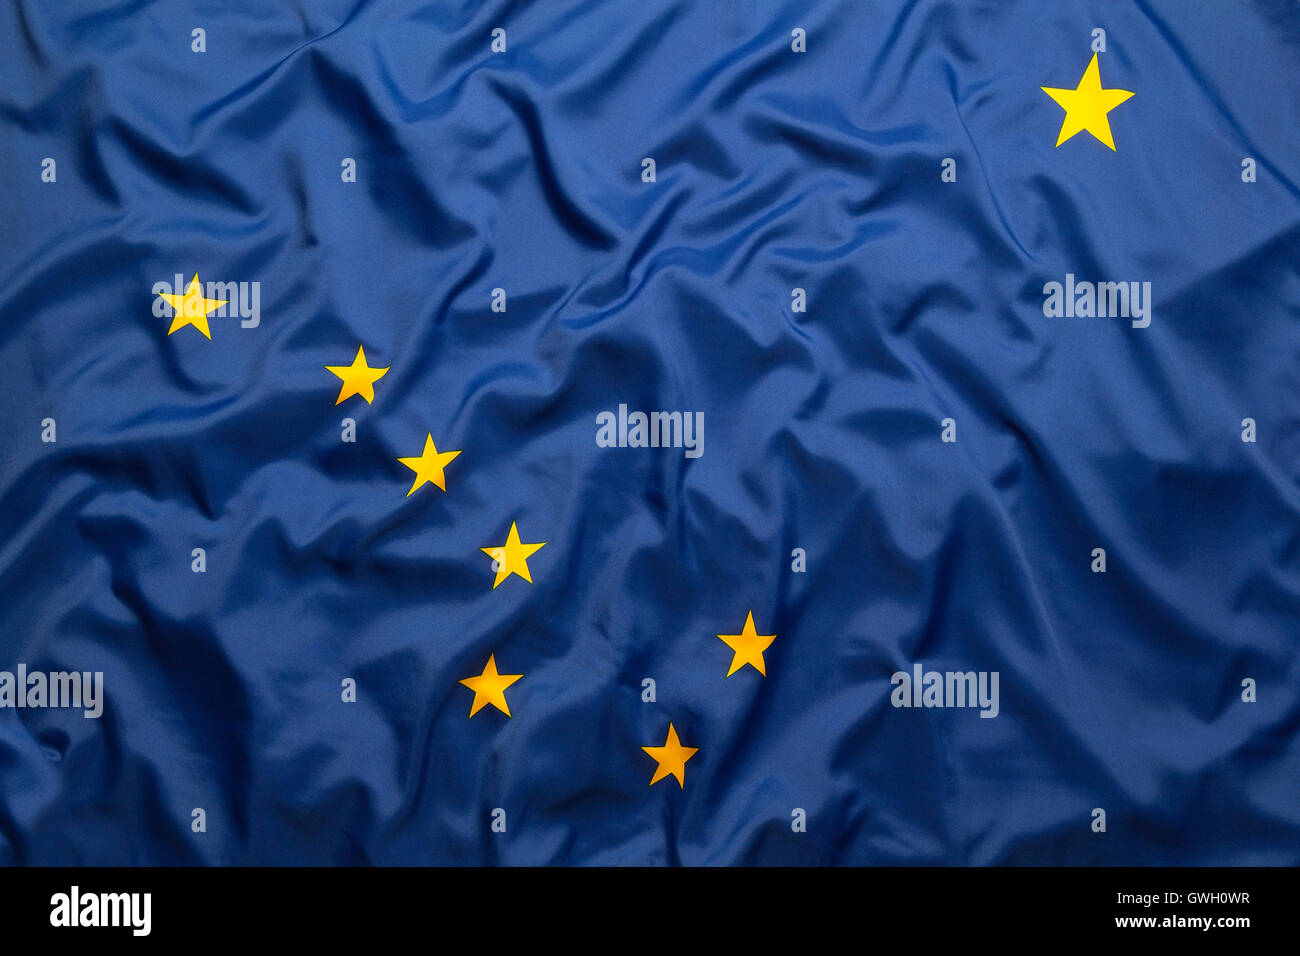 Textile flag of Alaska for background Stock Photo